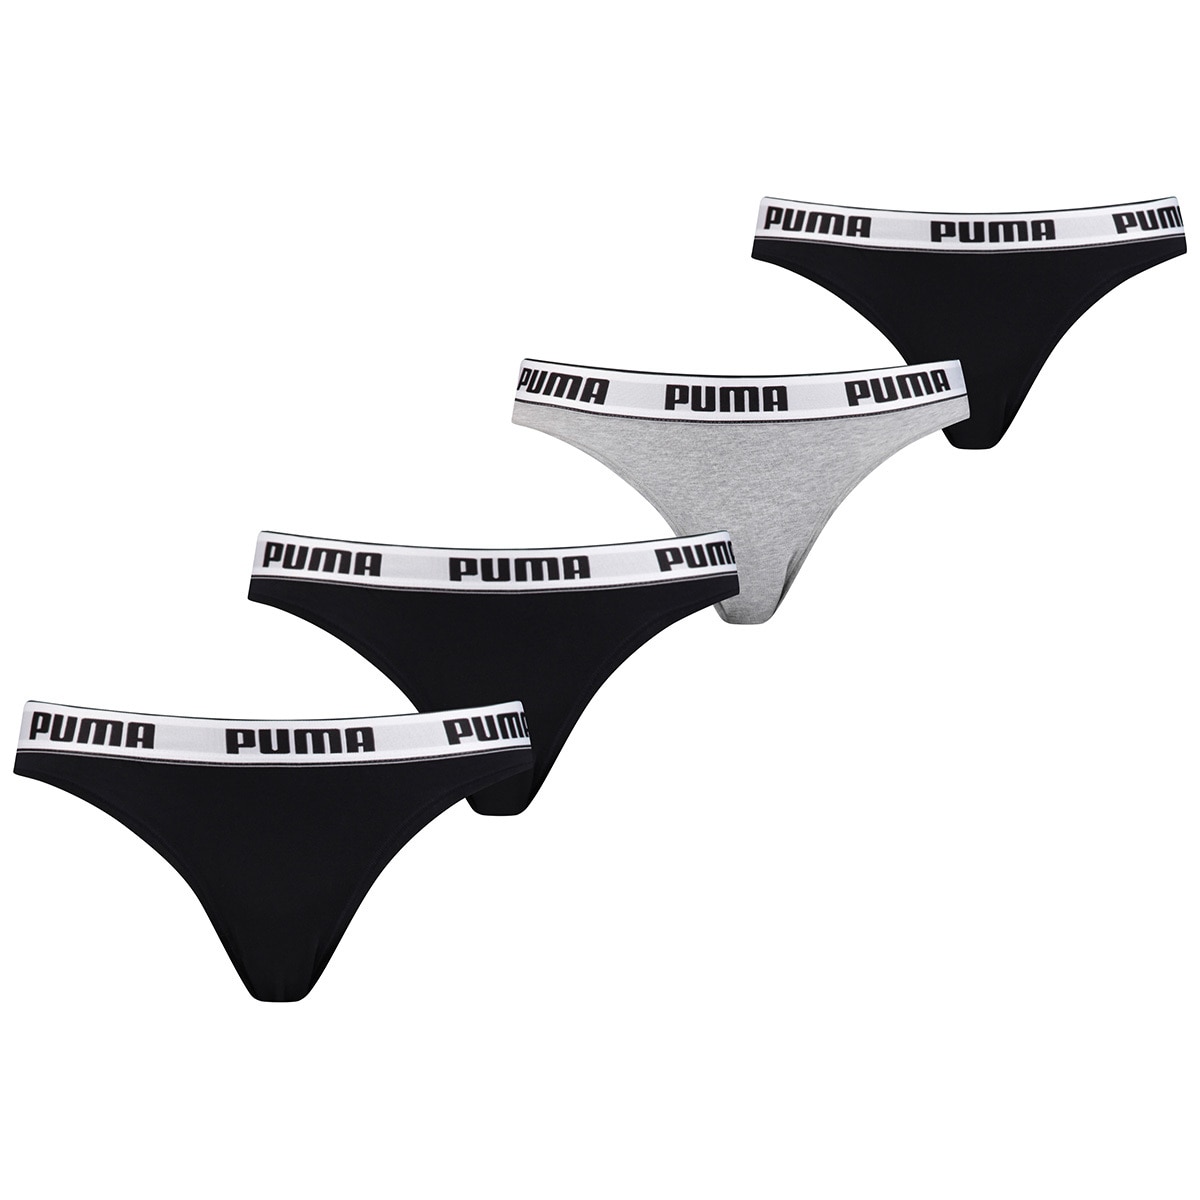 puma underwear australia